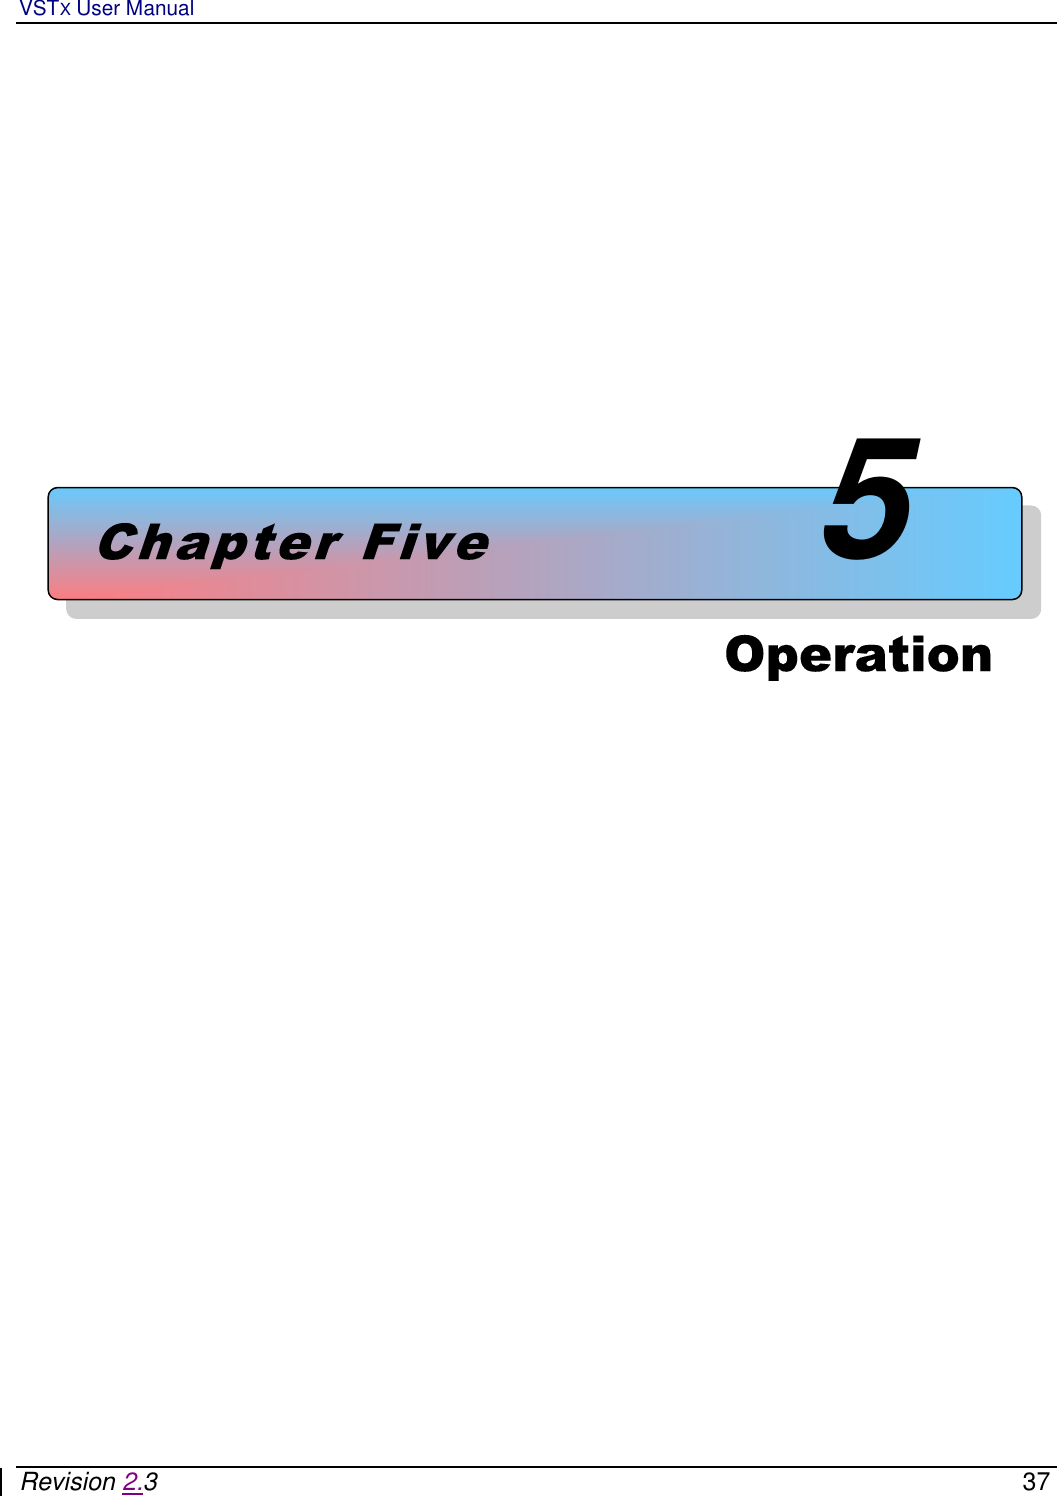 VSTX User Manual   Revision 2.3    37            Chapter Five5Operation  